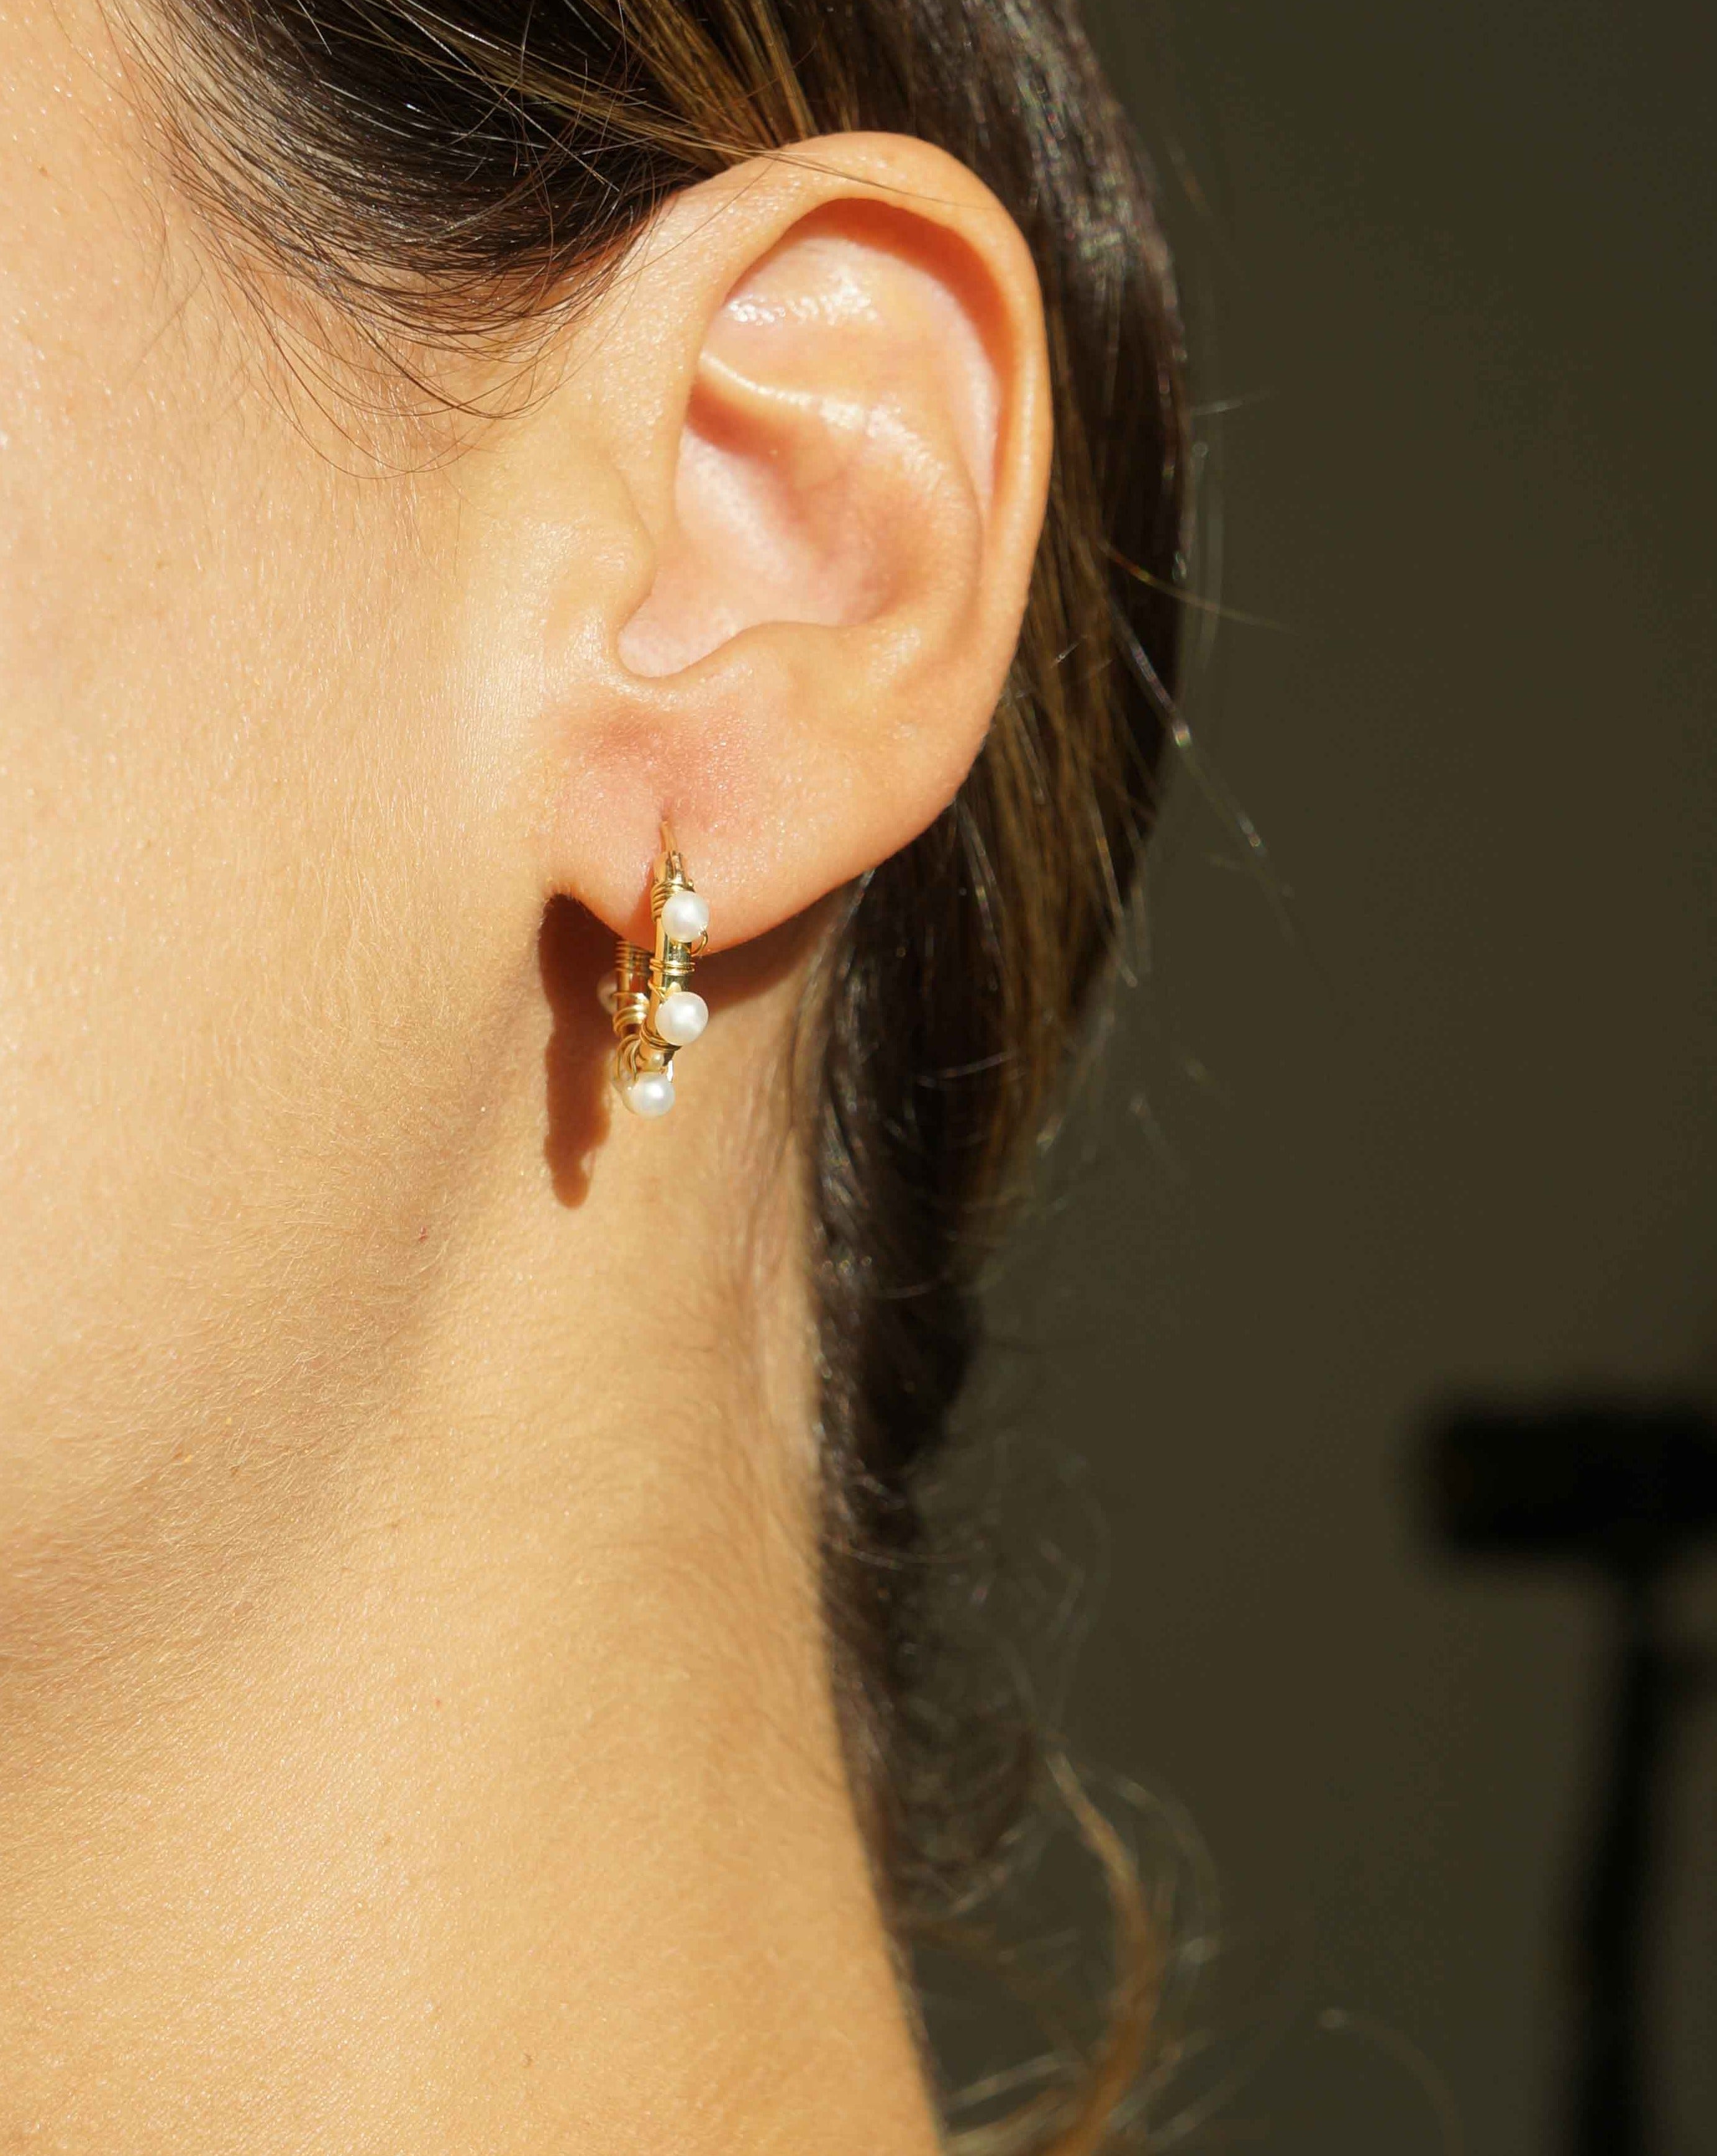 Natasha Hoop Earrings by KOZAKH. 12mm snap closure hoop earrings in 14K Gold Filled, featuring 7mm white potato Pearls.